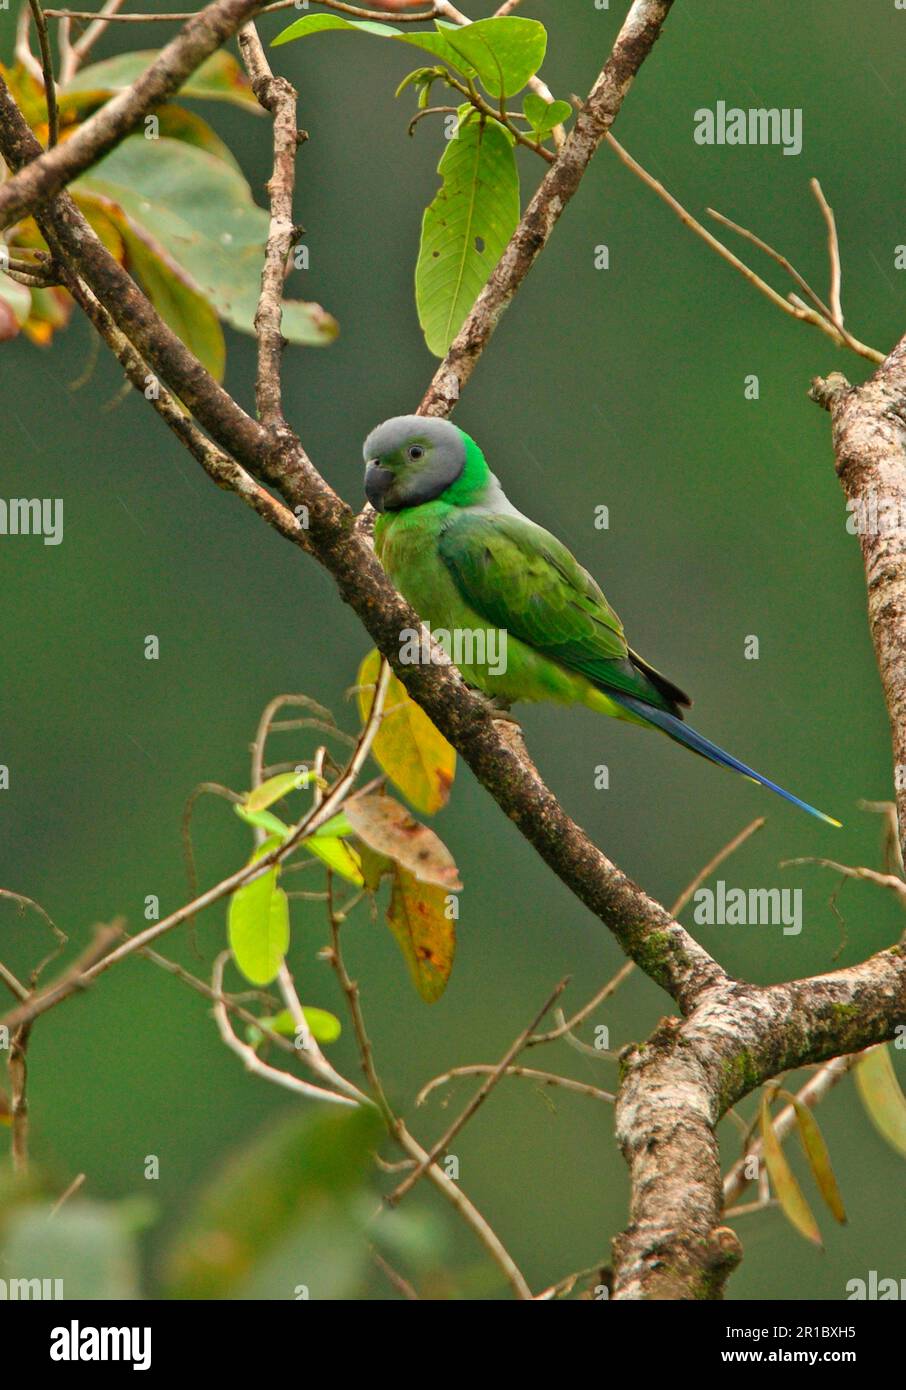 Layard's parakeet (Psittacula calthropae), Blue-tailed Parakeet, Blue-tailed Parakeet, Blue-tailed Parakeets, Parakeets, Parrots, Parakeets, Animals Stock Photo